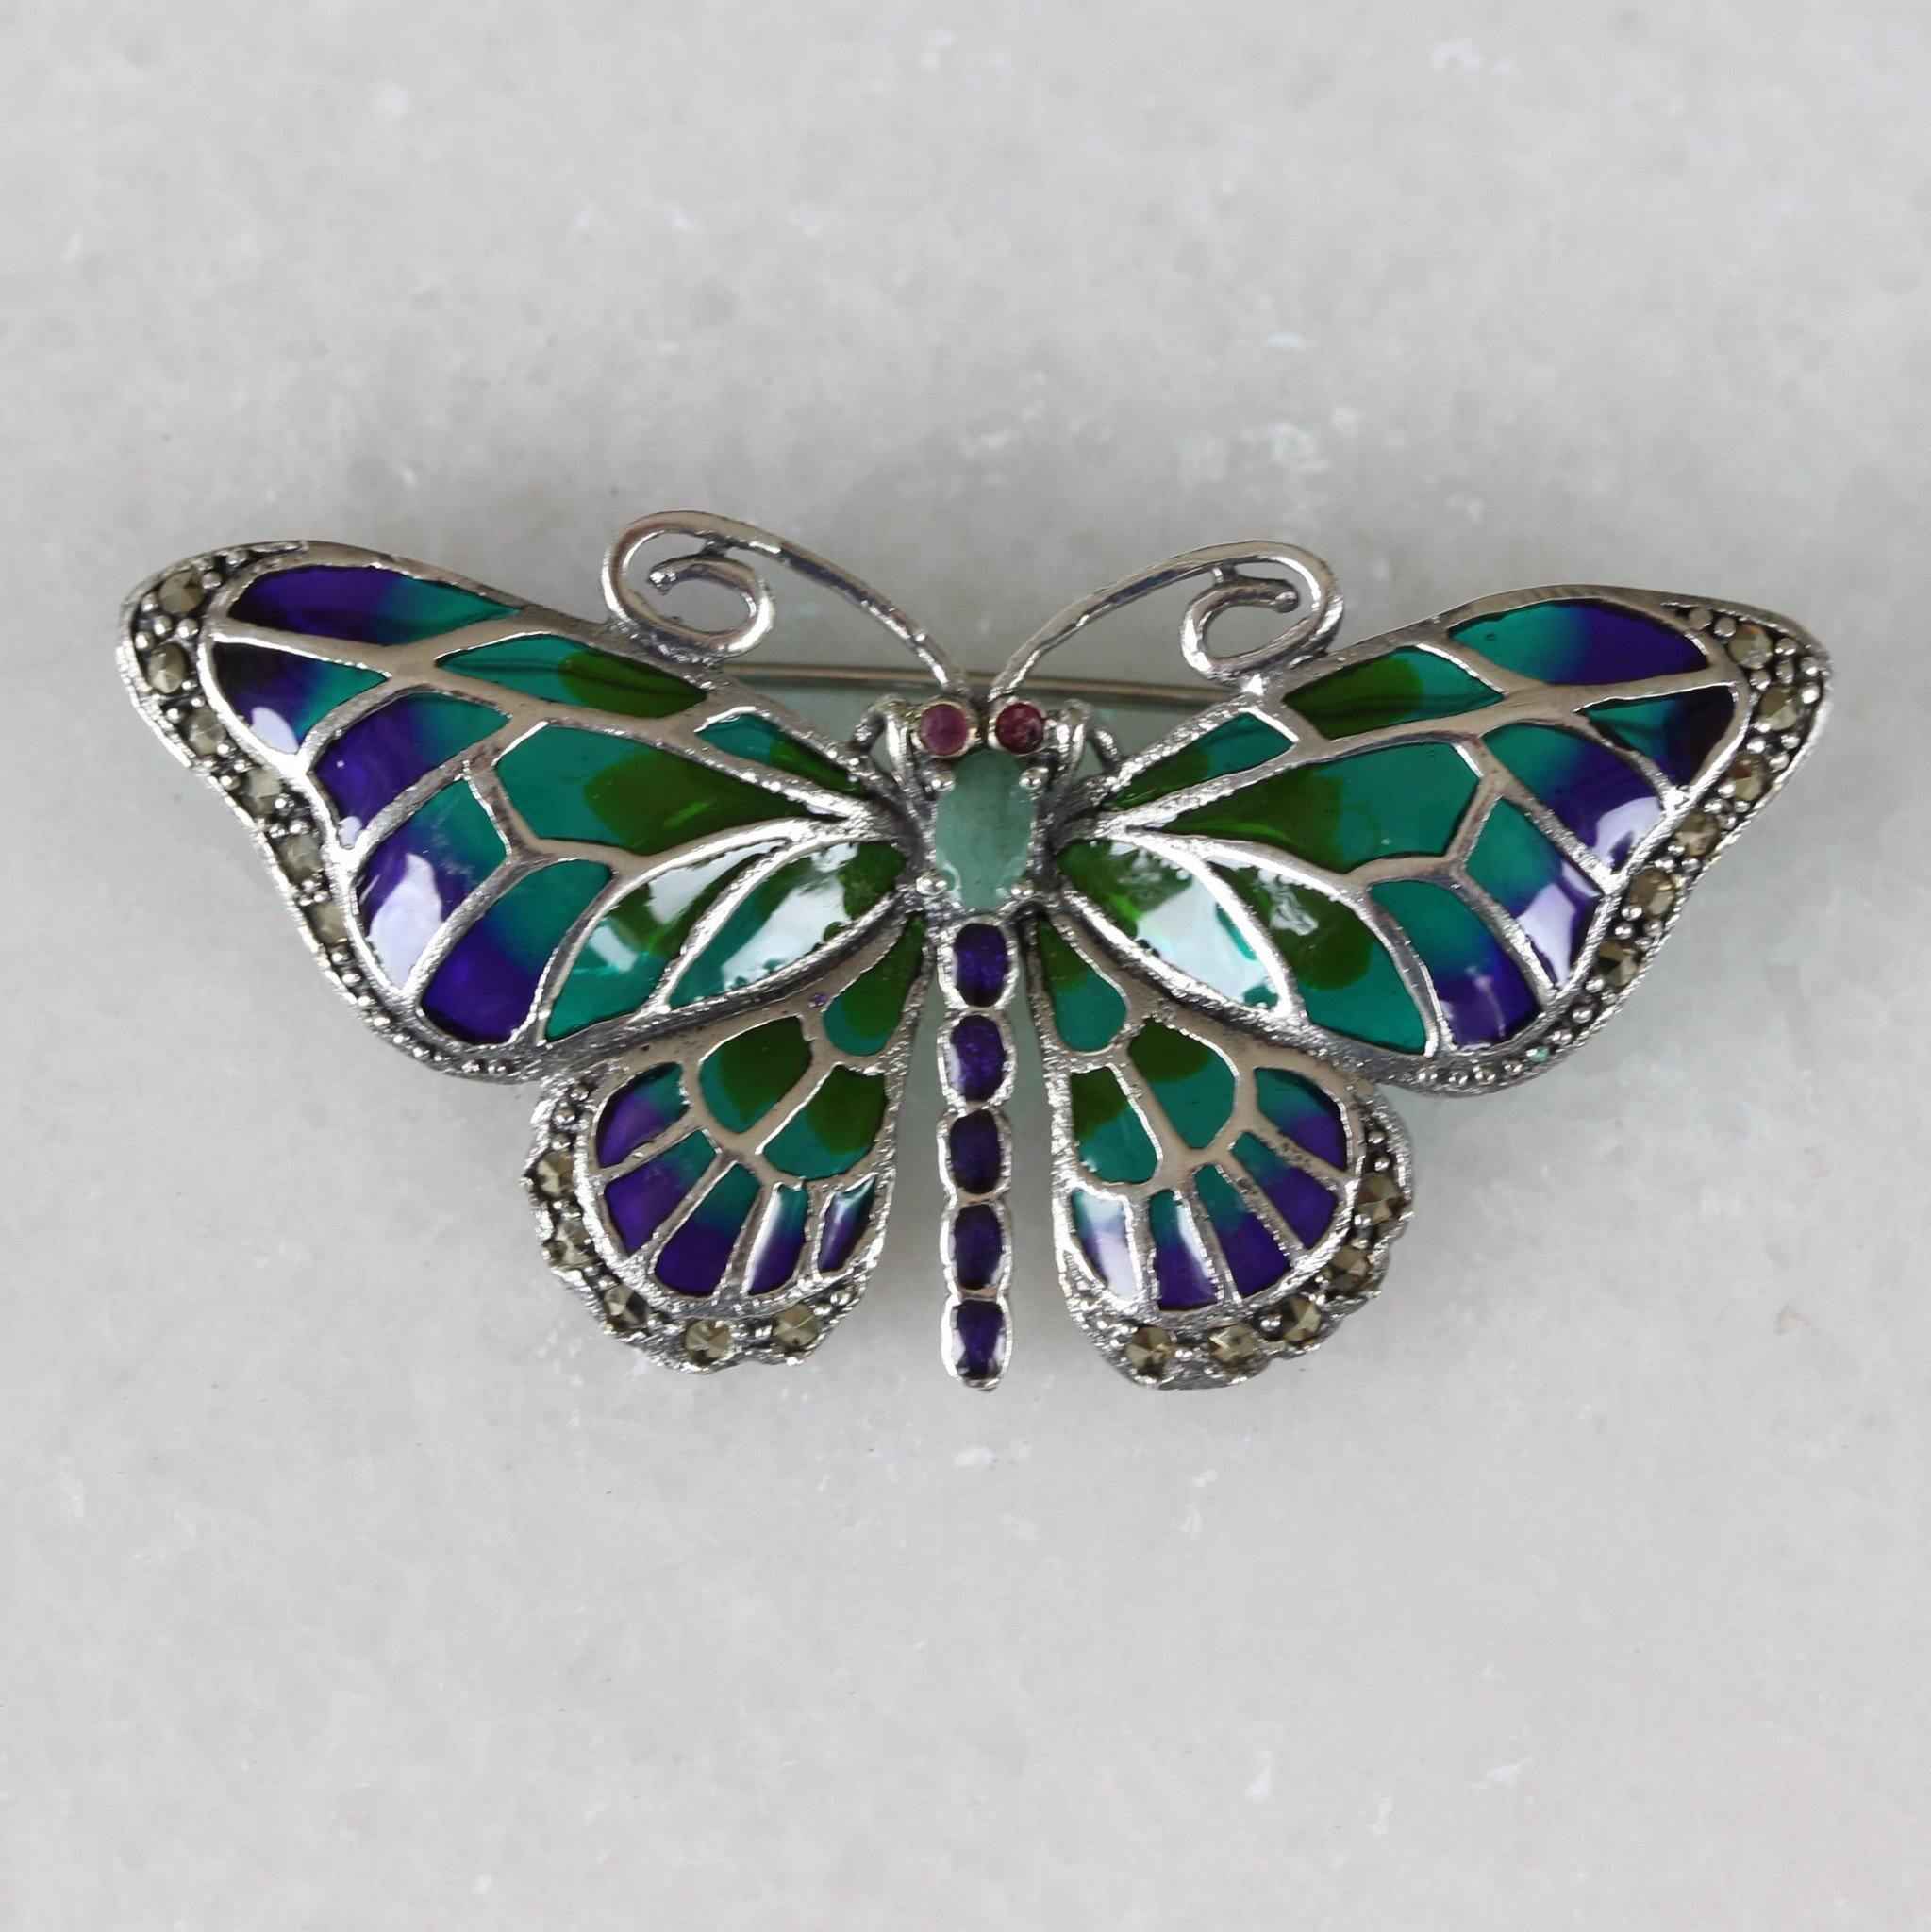 Butterfly Marcasite Emerald Enamel Brooch Pin Sterling Silver Vintage Inspired - STERLING SILVER DESIGNS